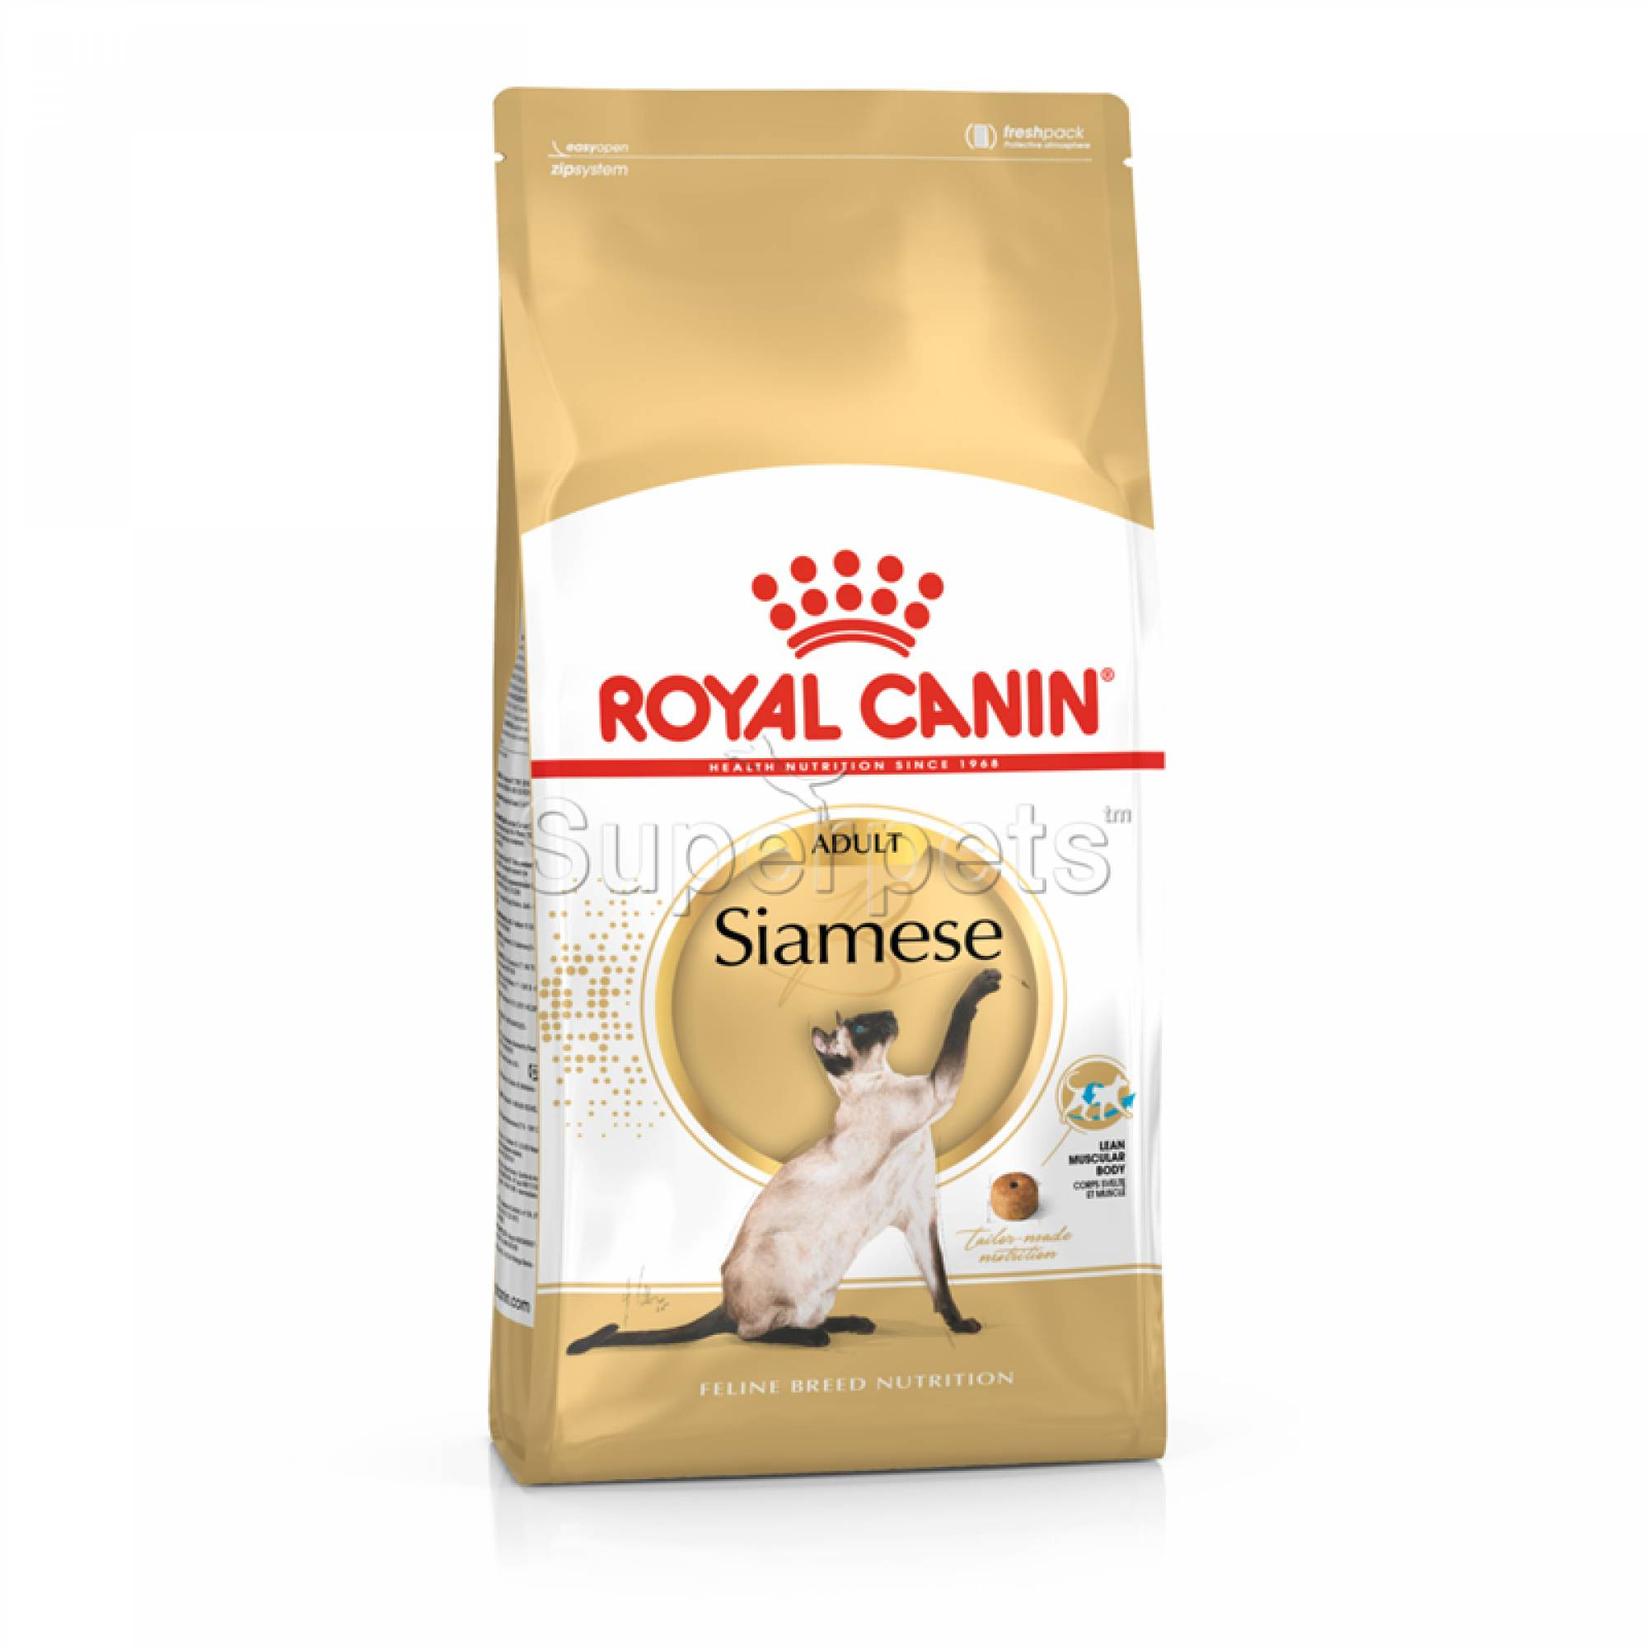 ROYAL CANIN Suva hrana za sijamske mačke Siamese 38 2kg